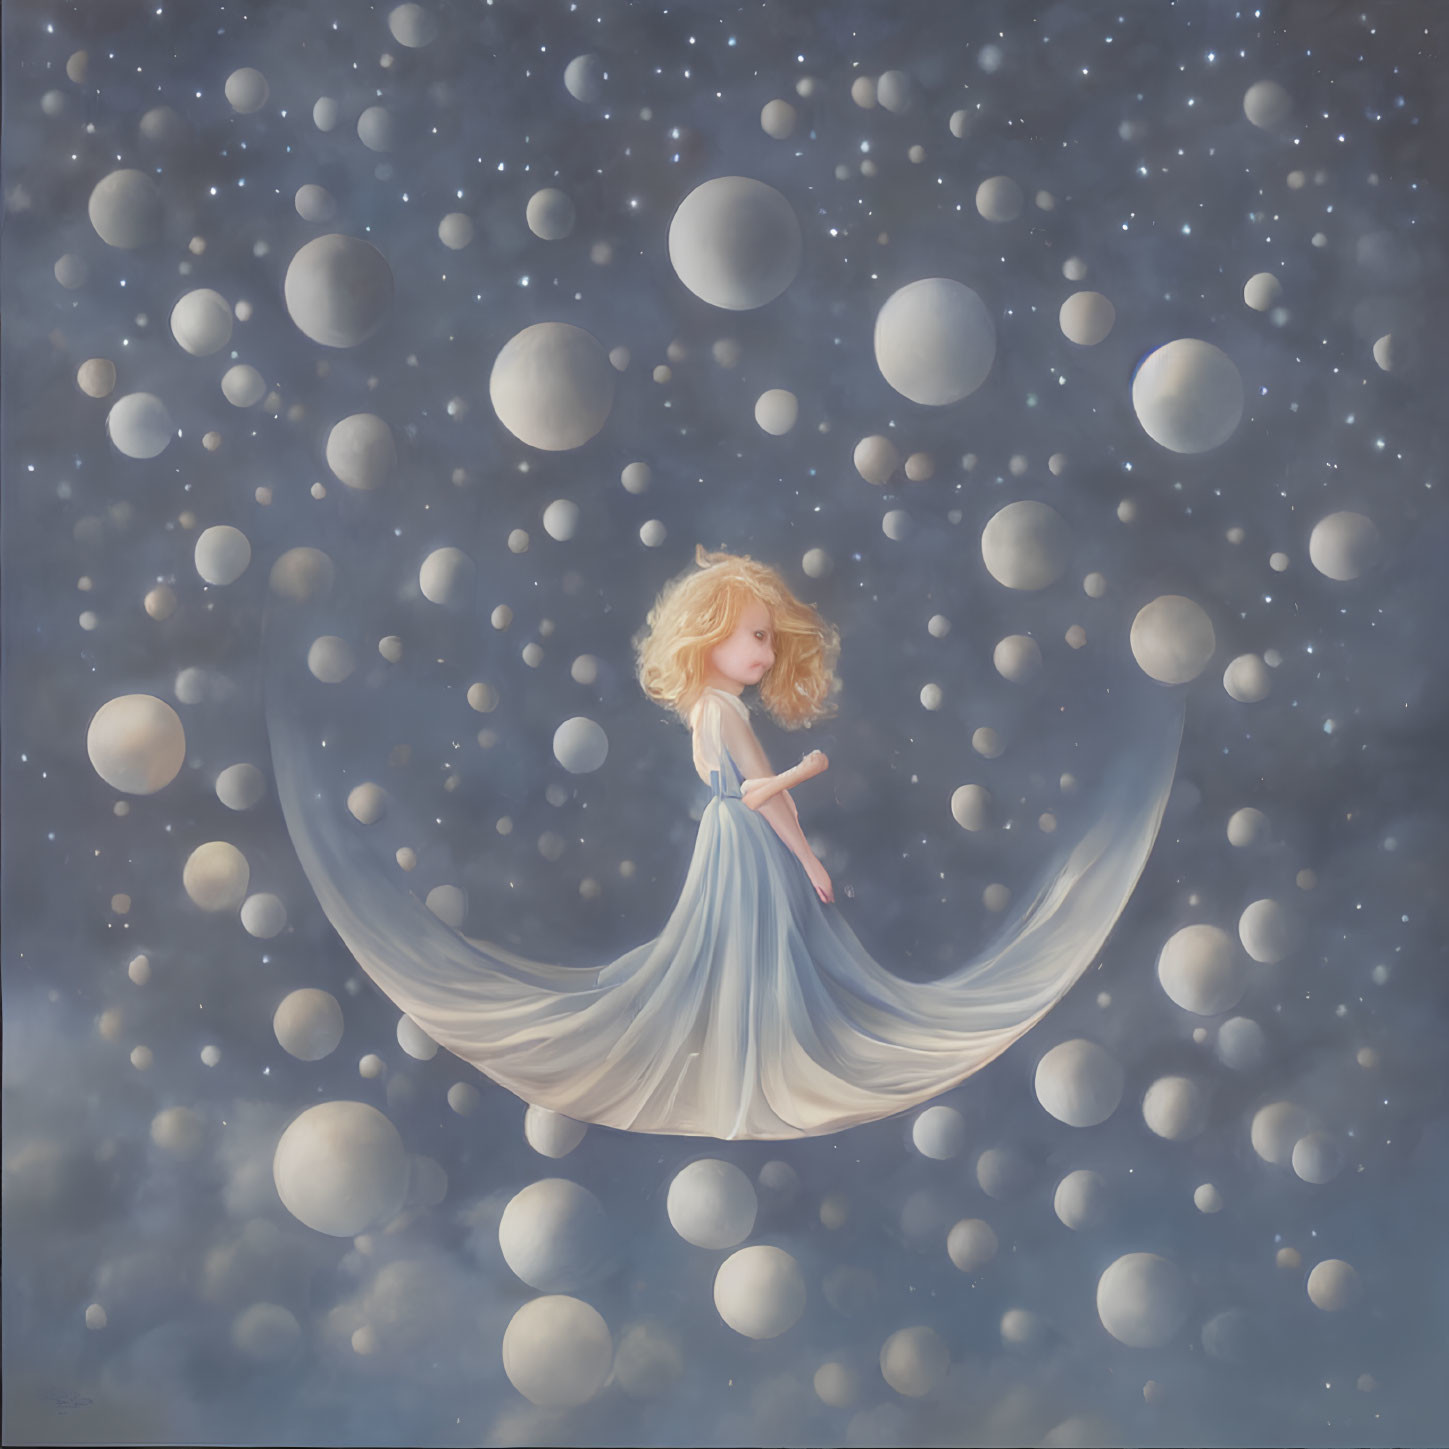 Blond girl in blue dress floating among spheres on celestial background